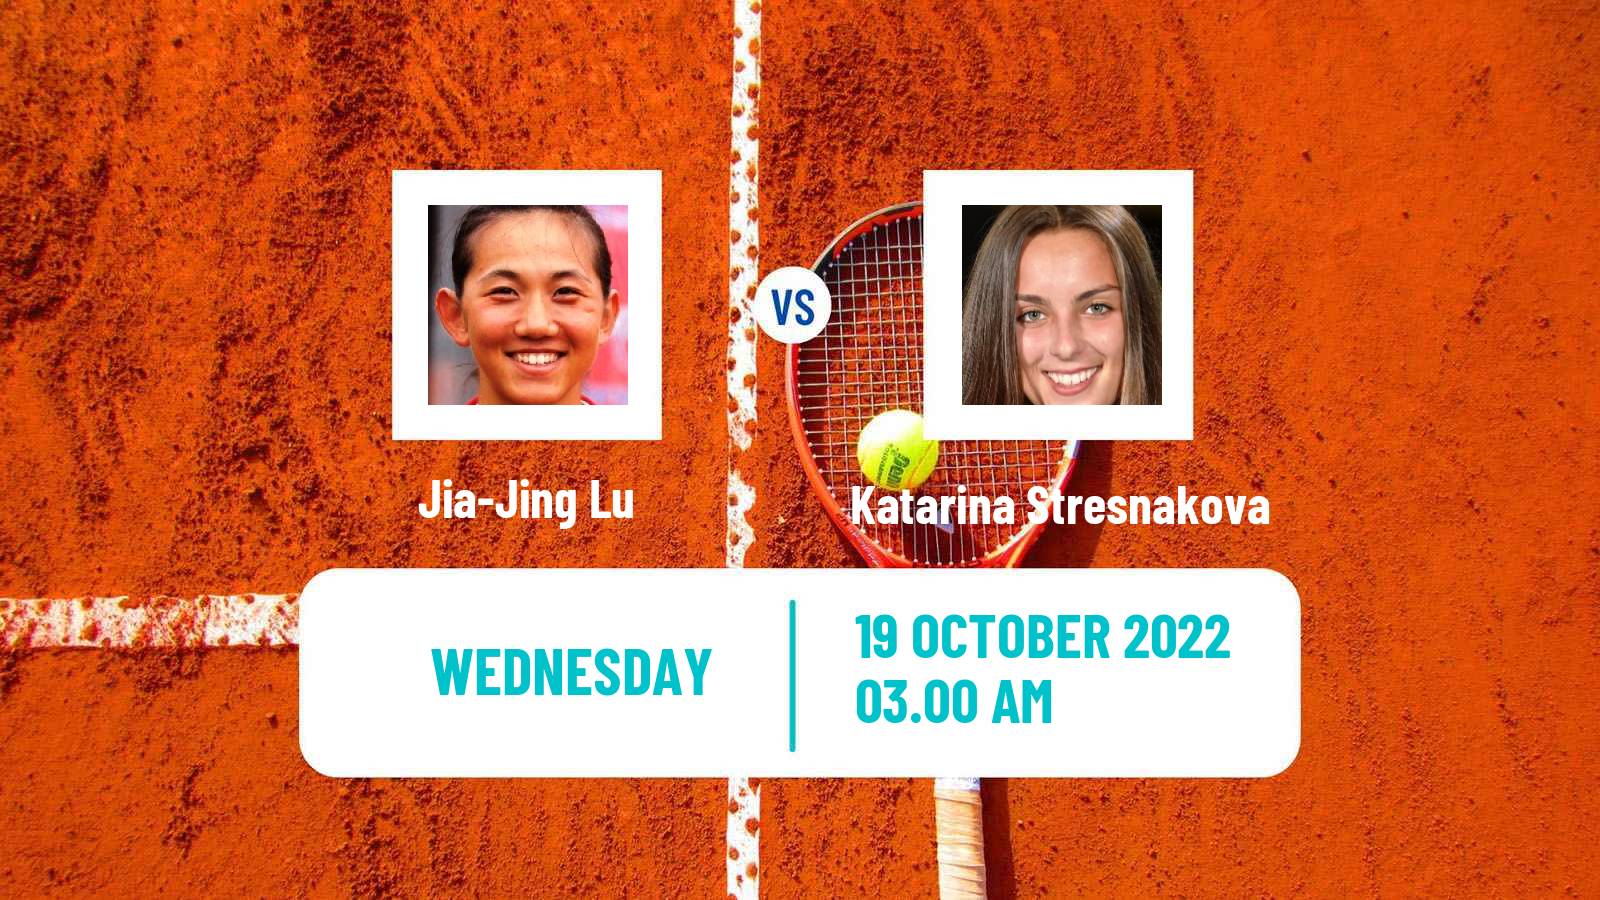 Tennis ITF Tournaments Jia-Jing Lu - Katarina Stresnakova